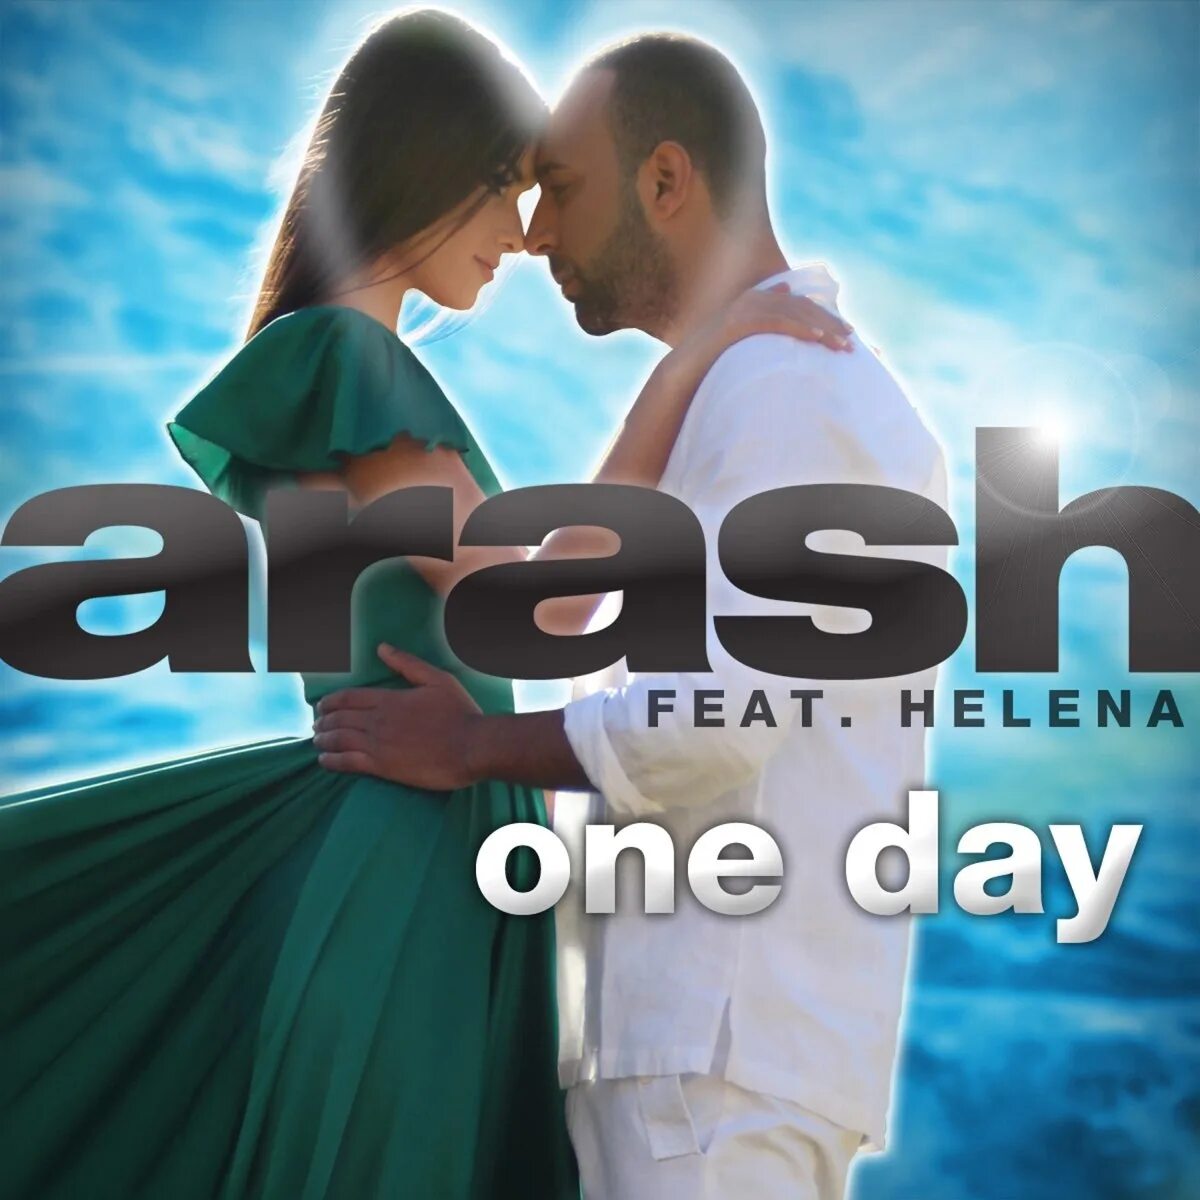 Араша broken. Arash Helena. Араш и Хелена one Day. One Day араш. One Day Arash feat Helena.